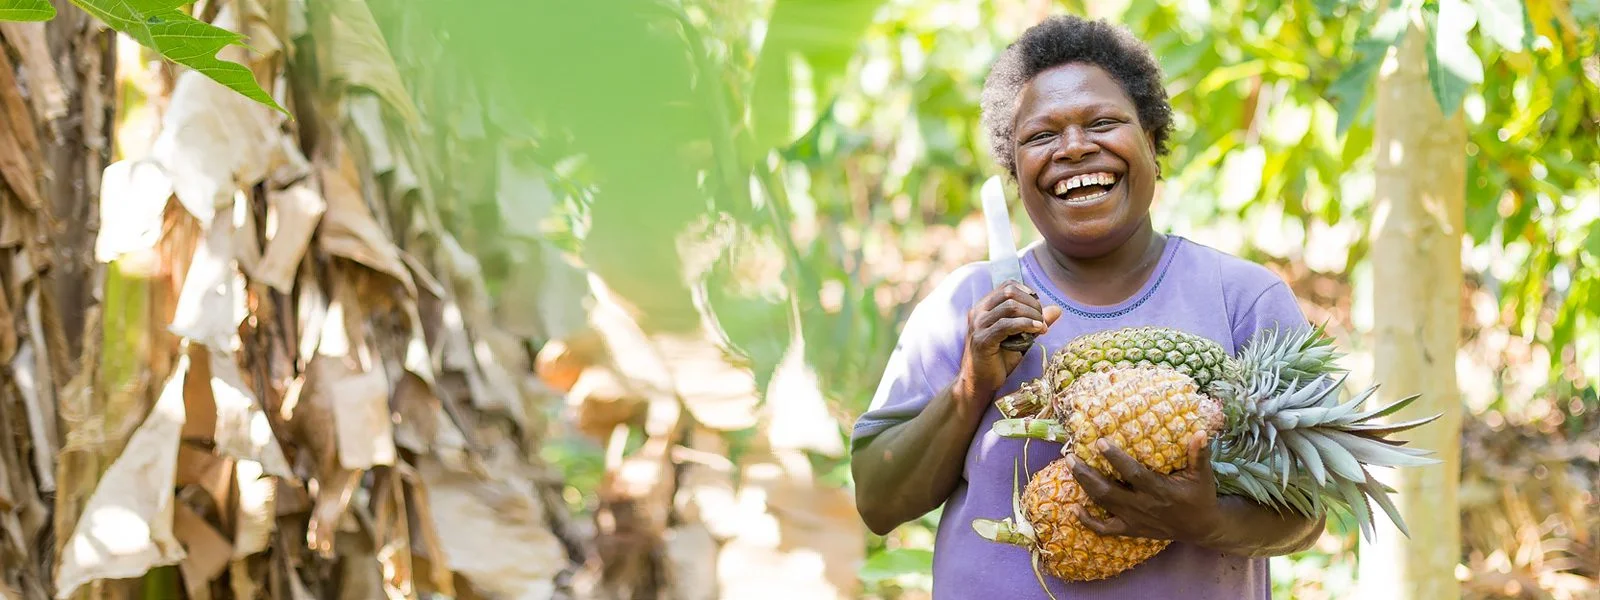 Makin, pineapple farmer in Vanuatu. Photo: Artur Francisco/Oxfam NZ